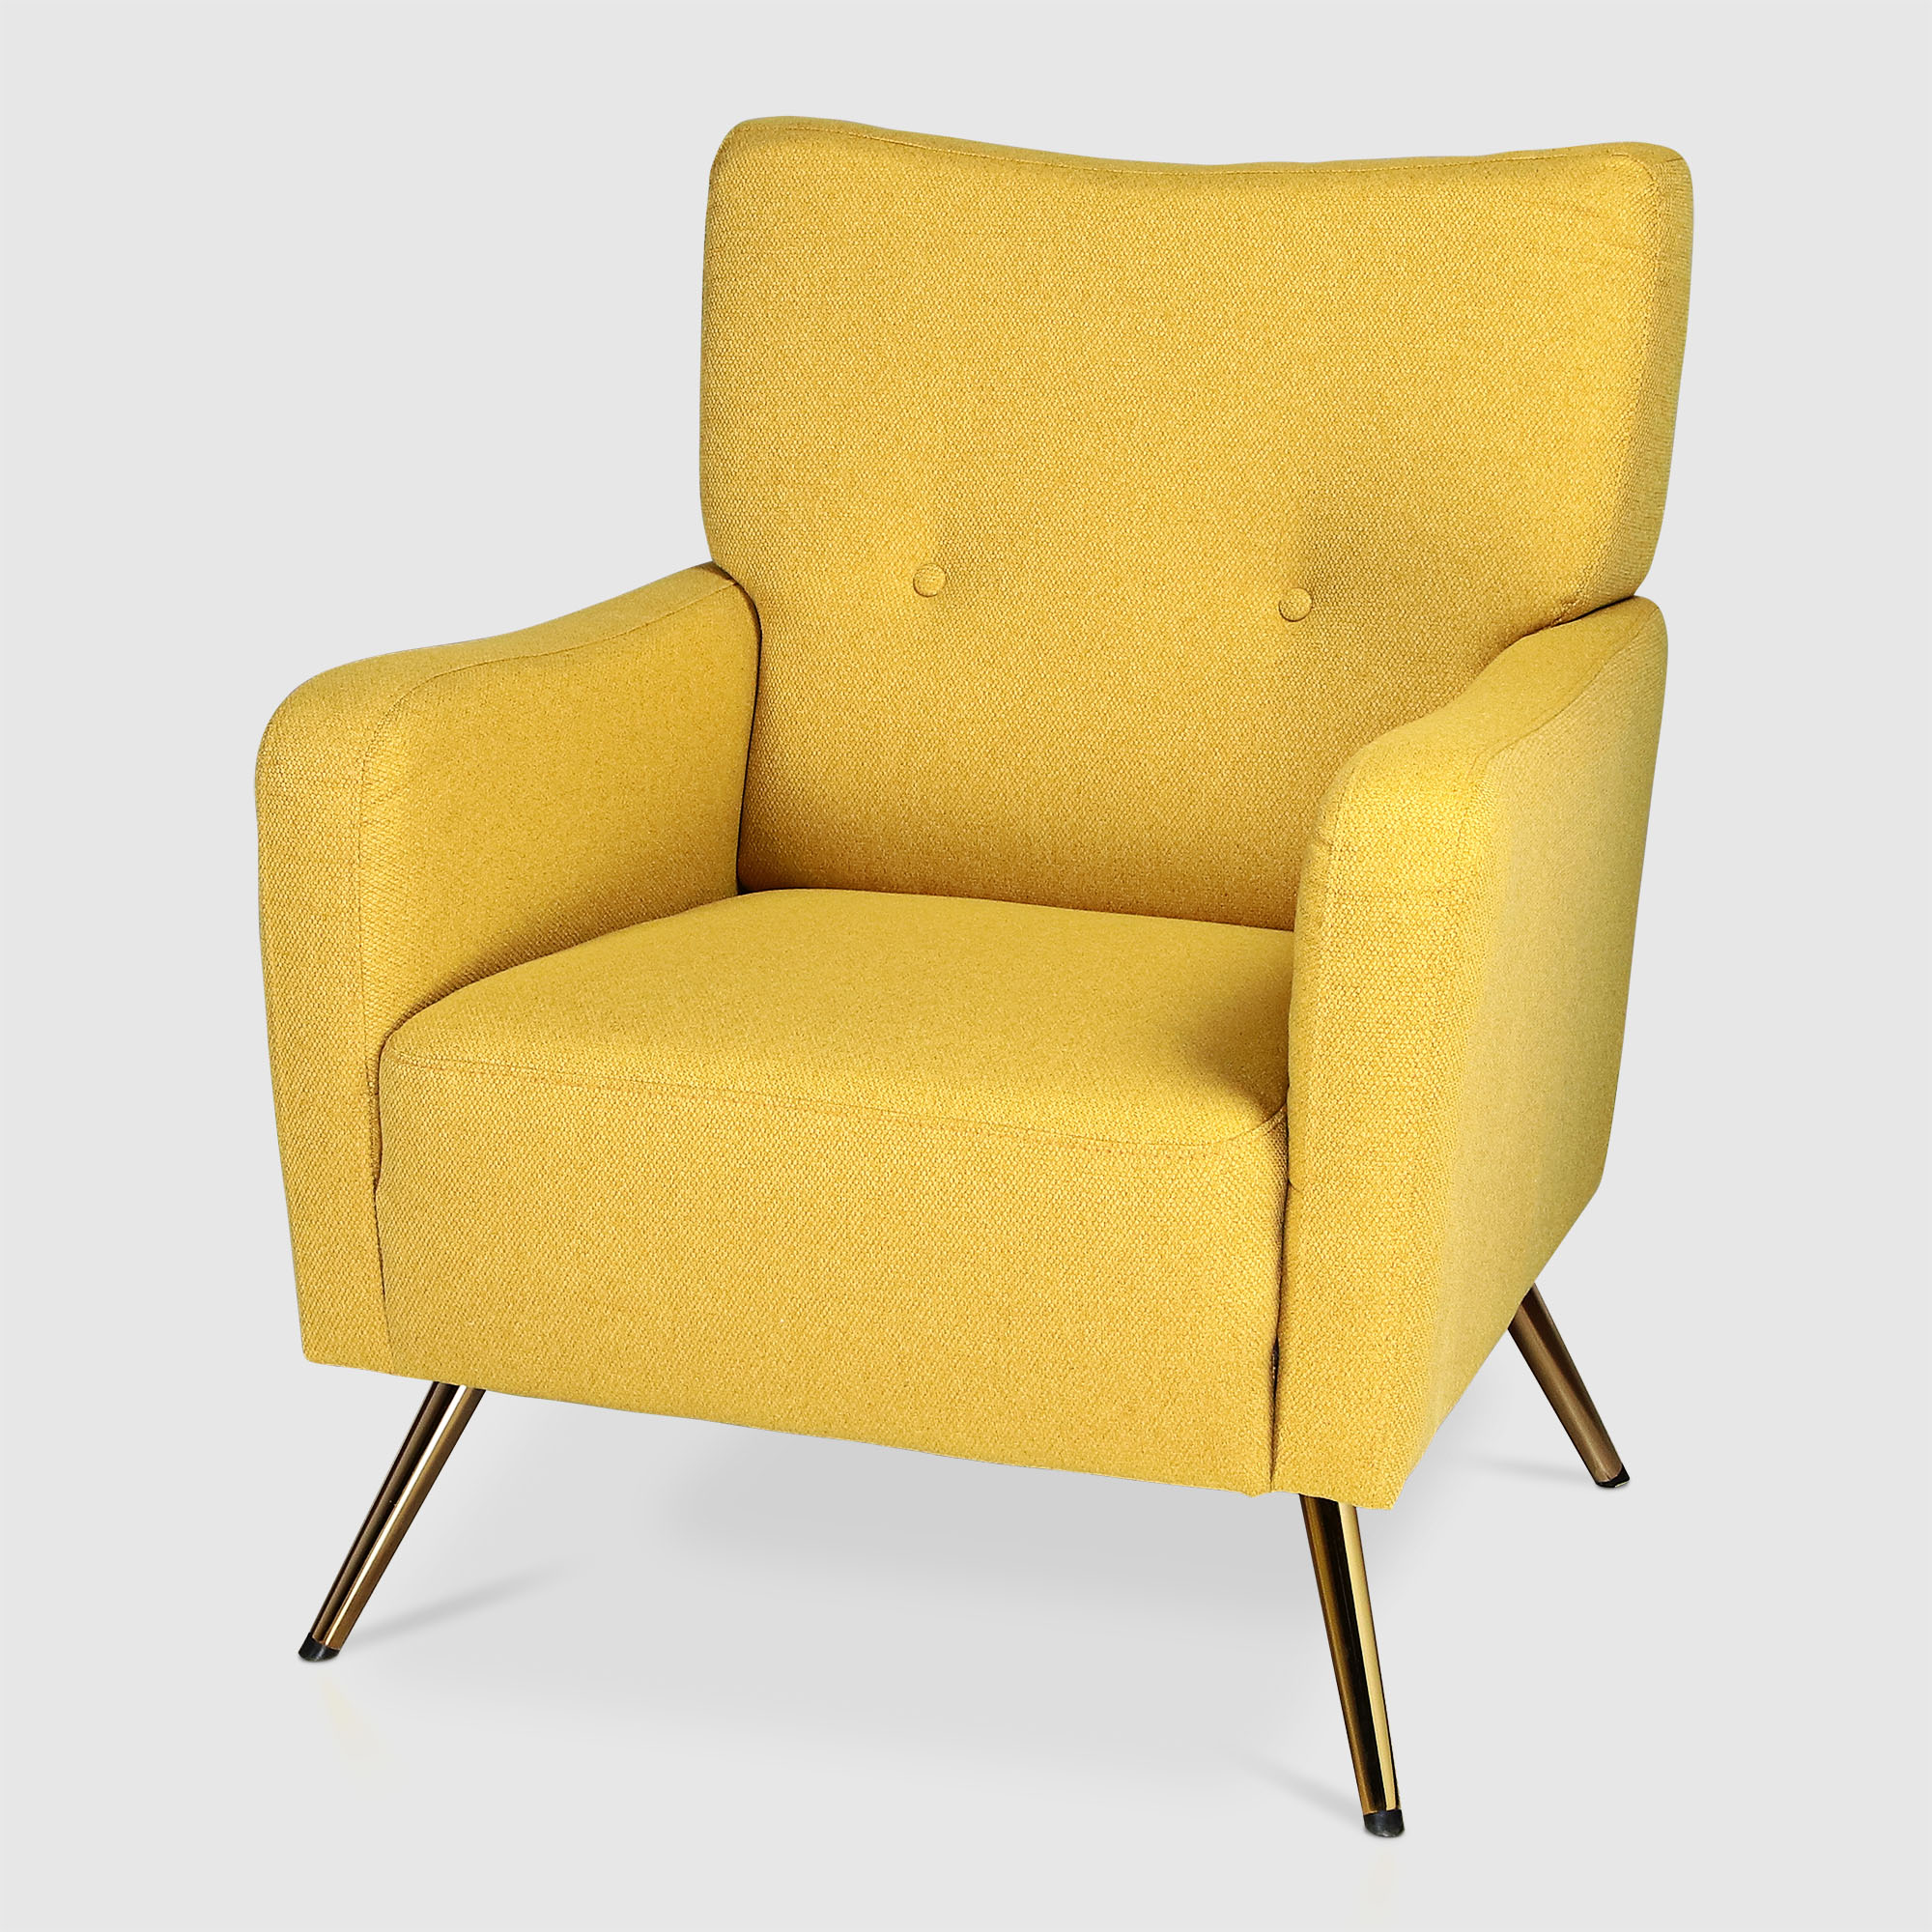 Кресло Liyasi Фиби желтое 73х72х88 см кресло liyasi оливия светло серое 72x67x66 см